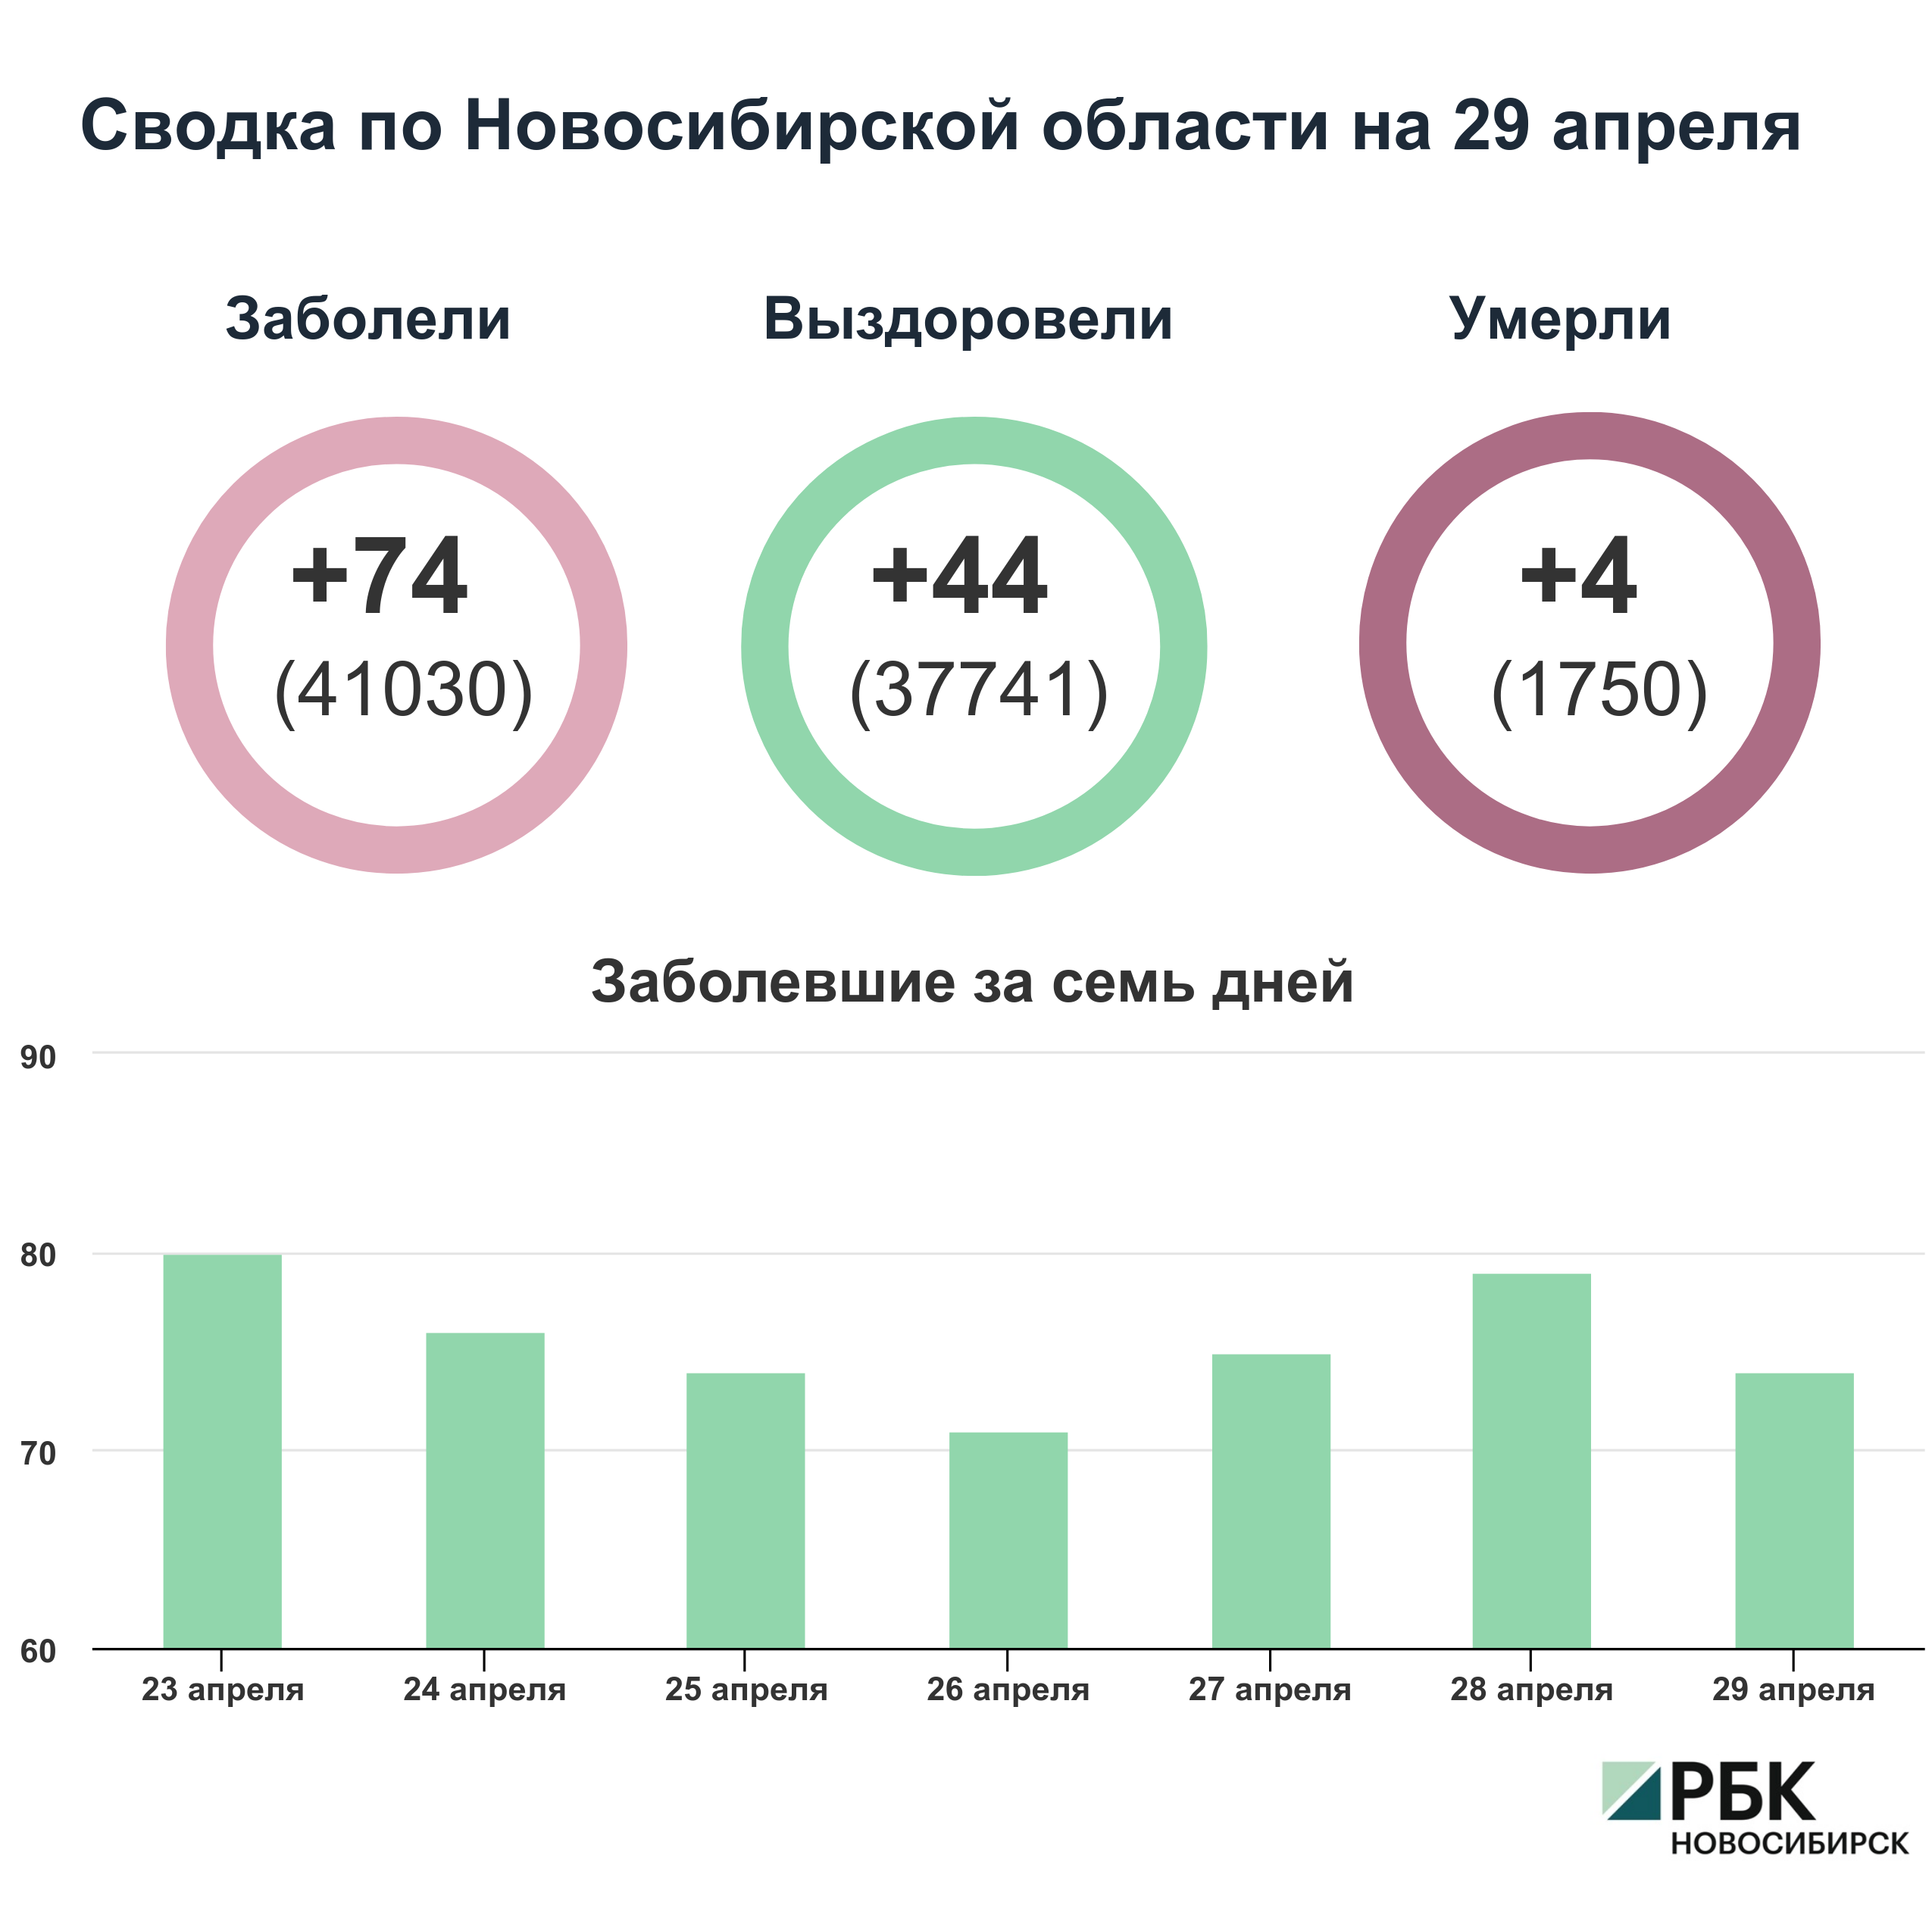 Коронавирус в Новосибирске: сводка на 29 апреля